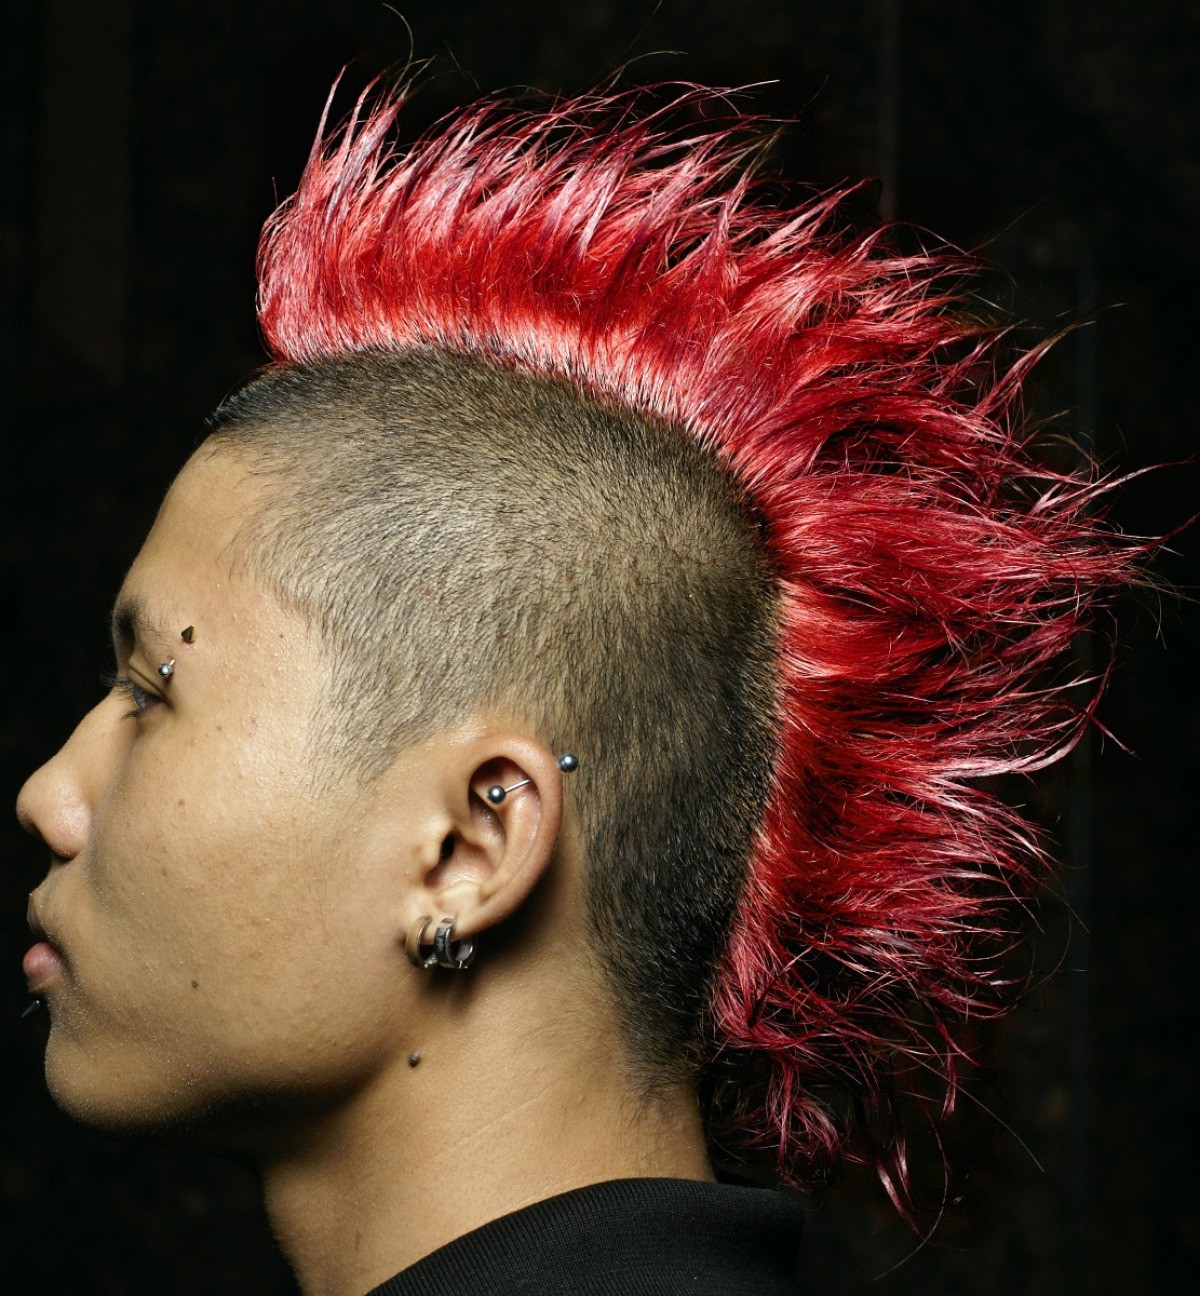 Sleeping With a Mohawk Haircut? | ThriftyFun